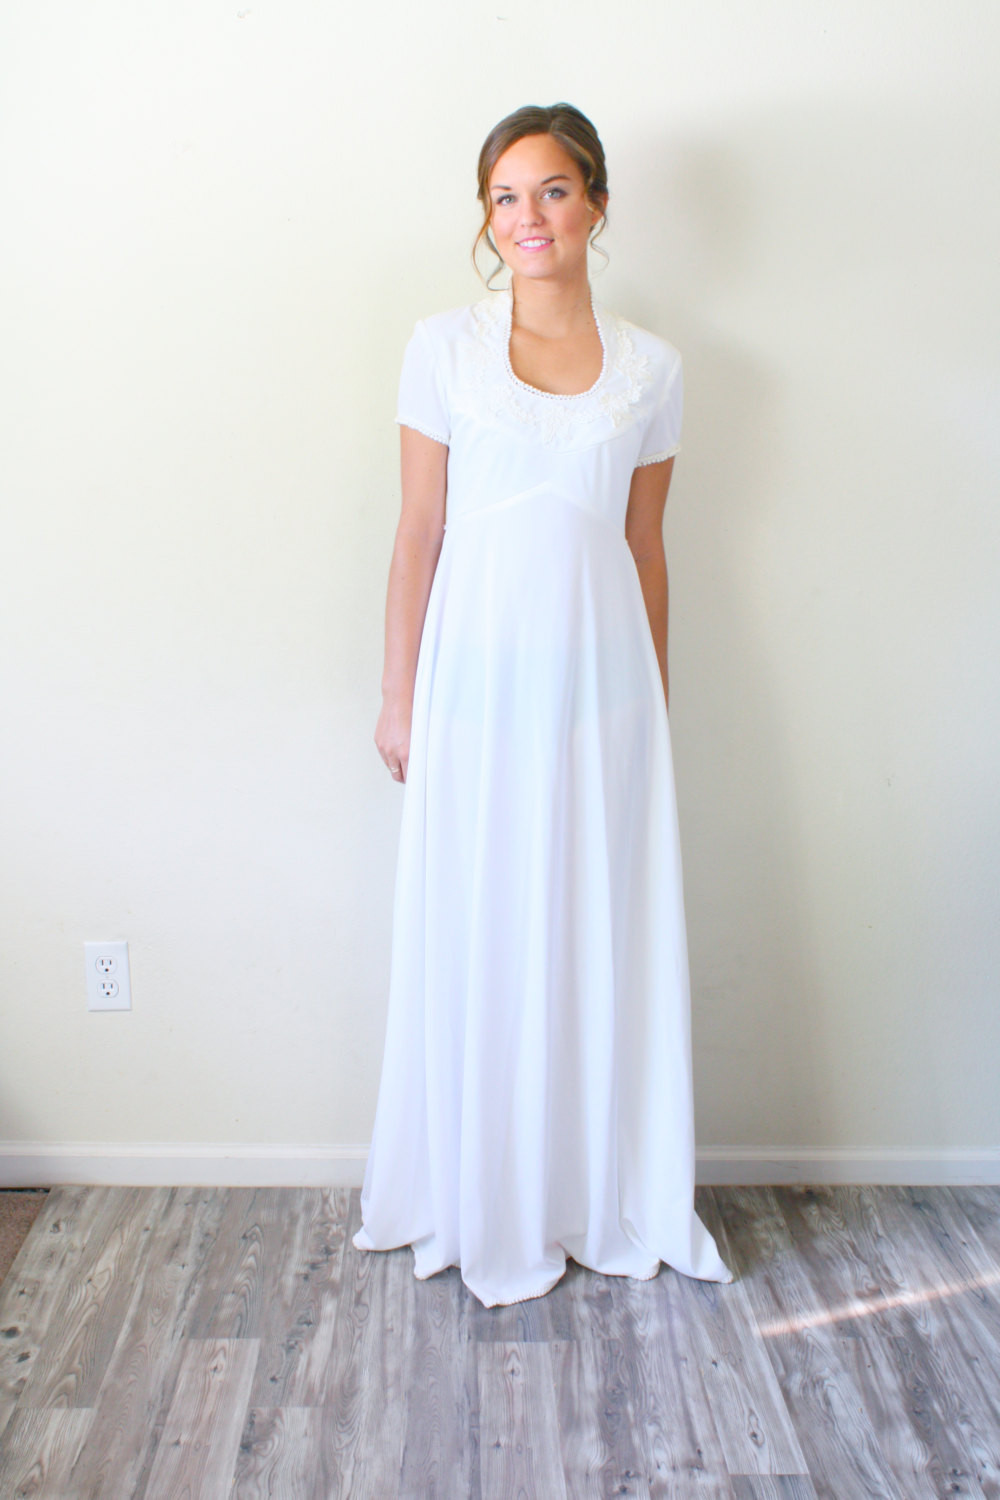 Short Sleeve Wedding Gown
 Vintage White Wedding Dress Short Sleeve By